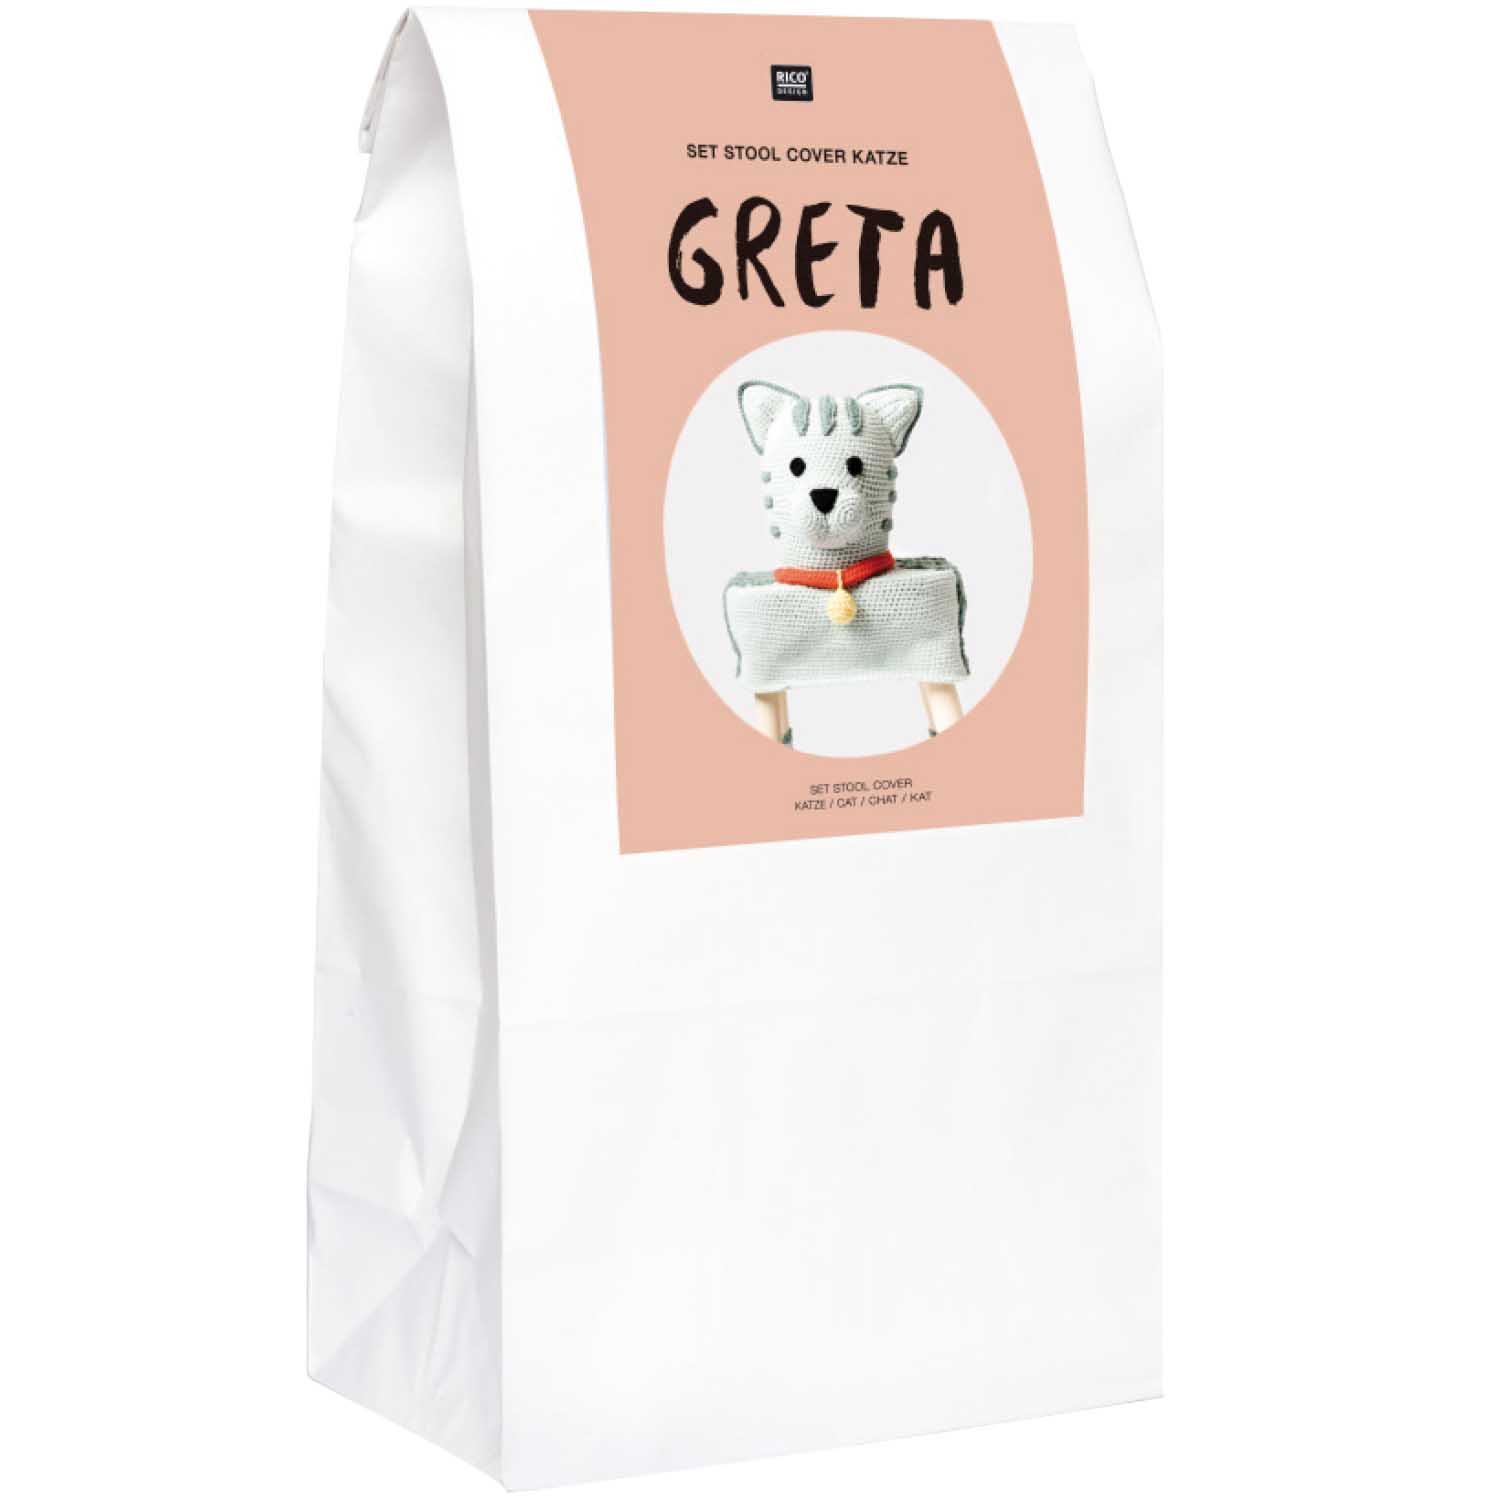 Häkelpaket Stool Cover - Katze 'Greta'